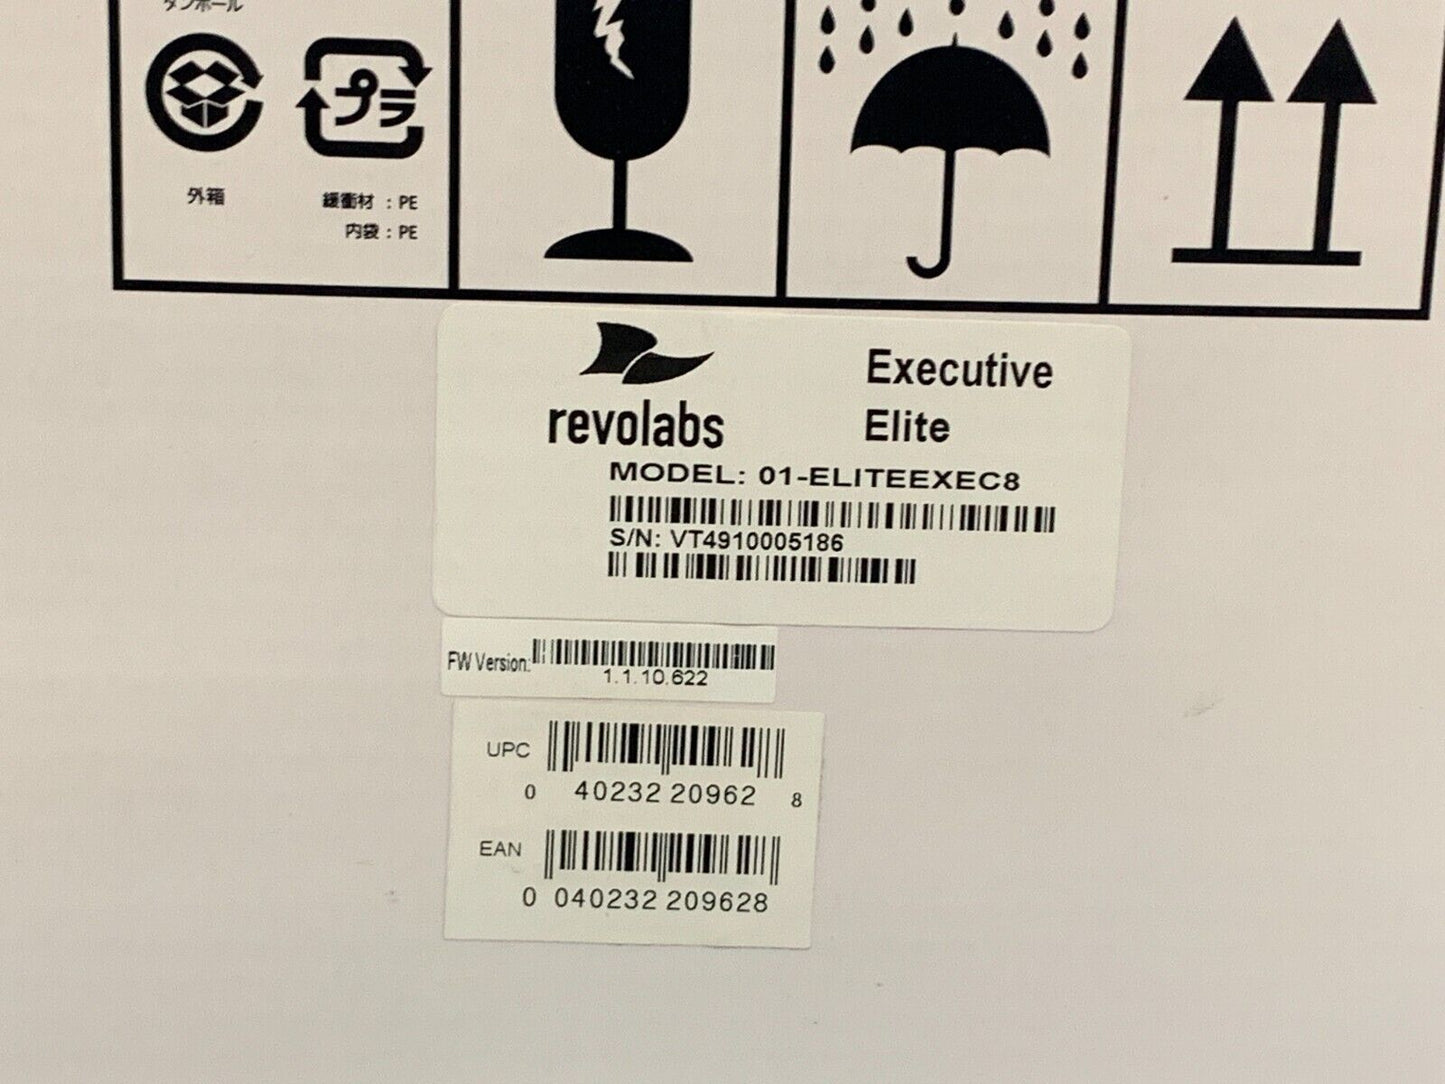 Revolabs 01-ELITEEXEC8 /Executive Elite 8-Channel Wireless System without Mics